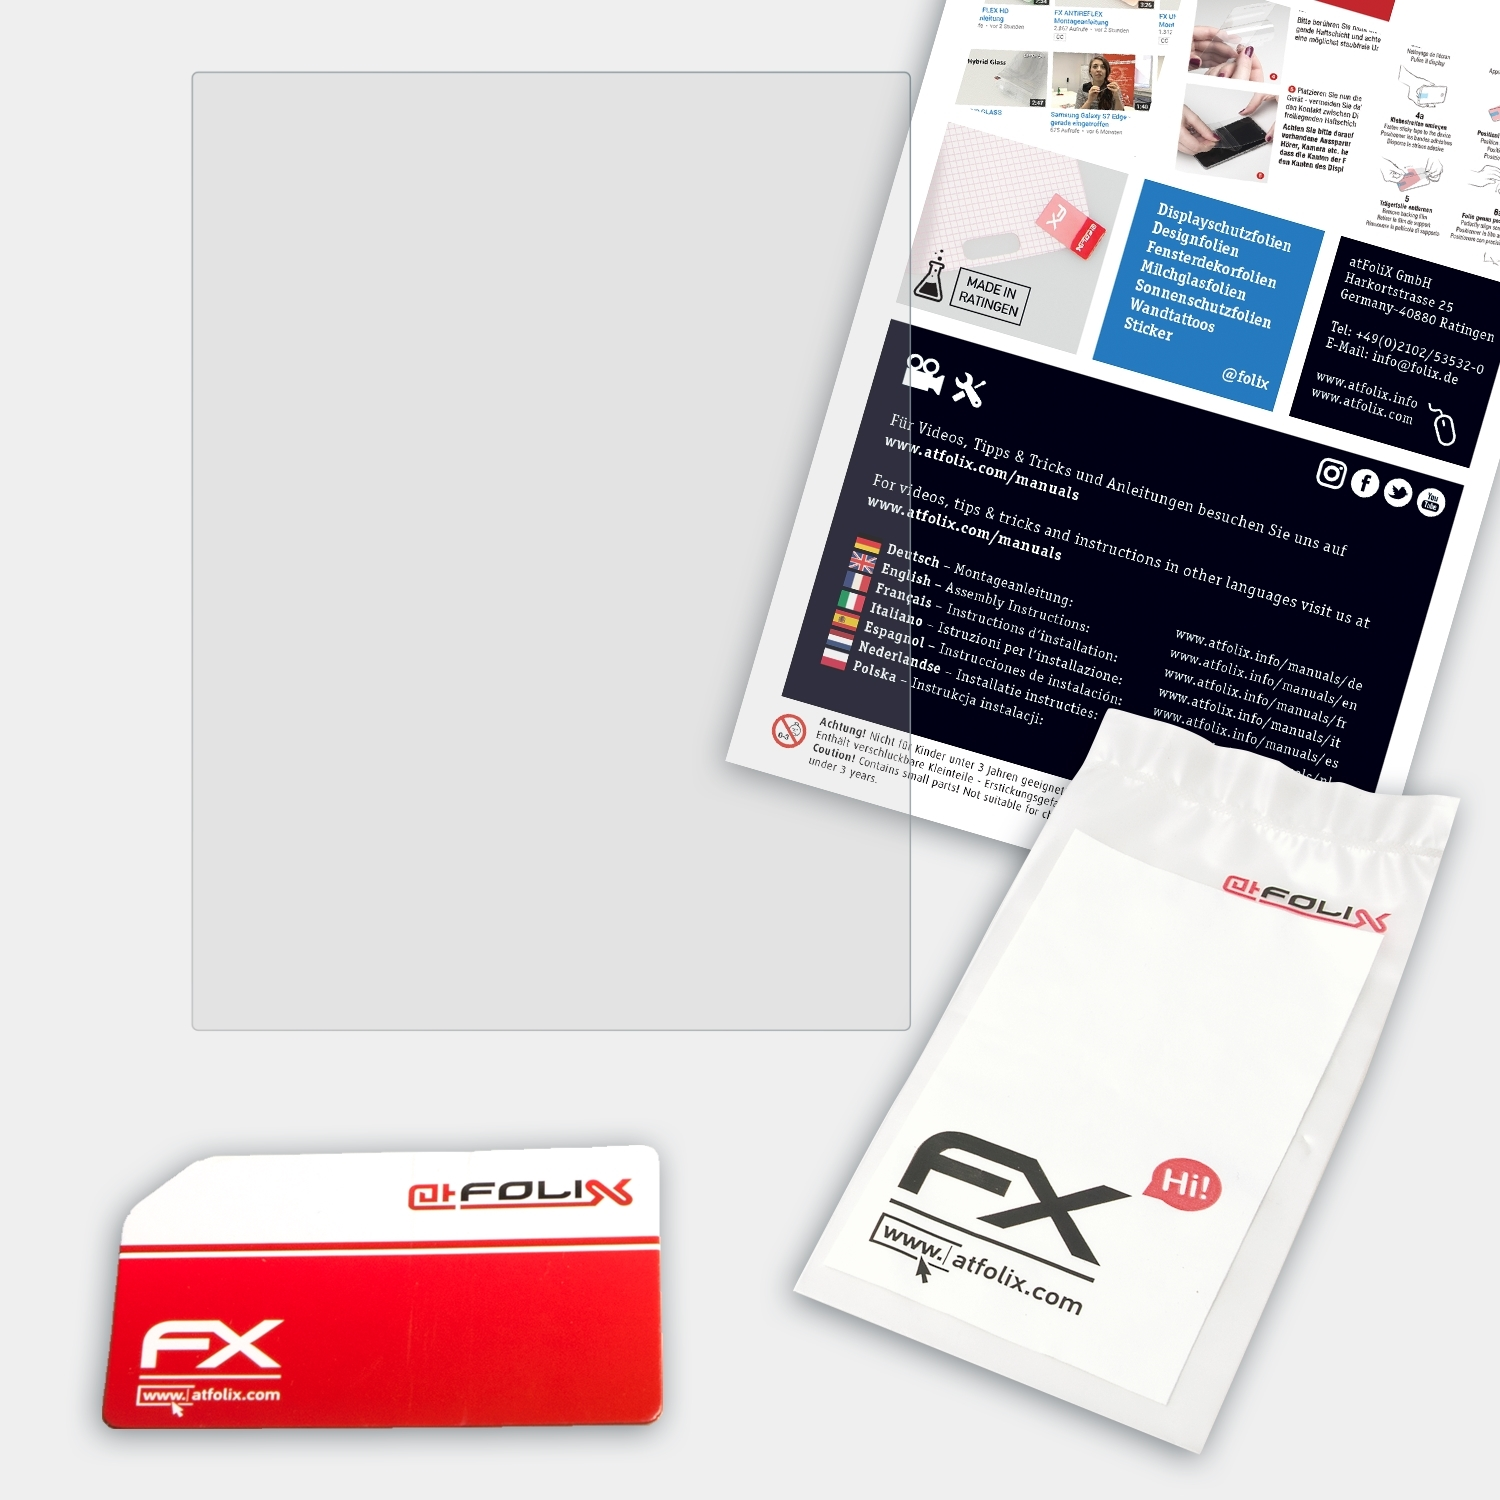 InkPad Color) ATFOLIX Schutzglas(für FX-Hybrid-Glass PocketBook